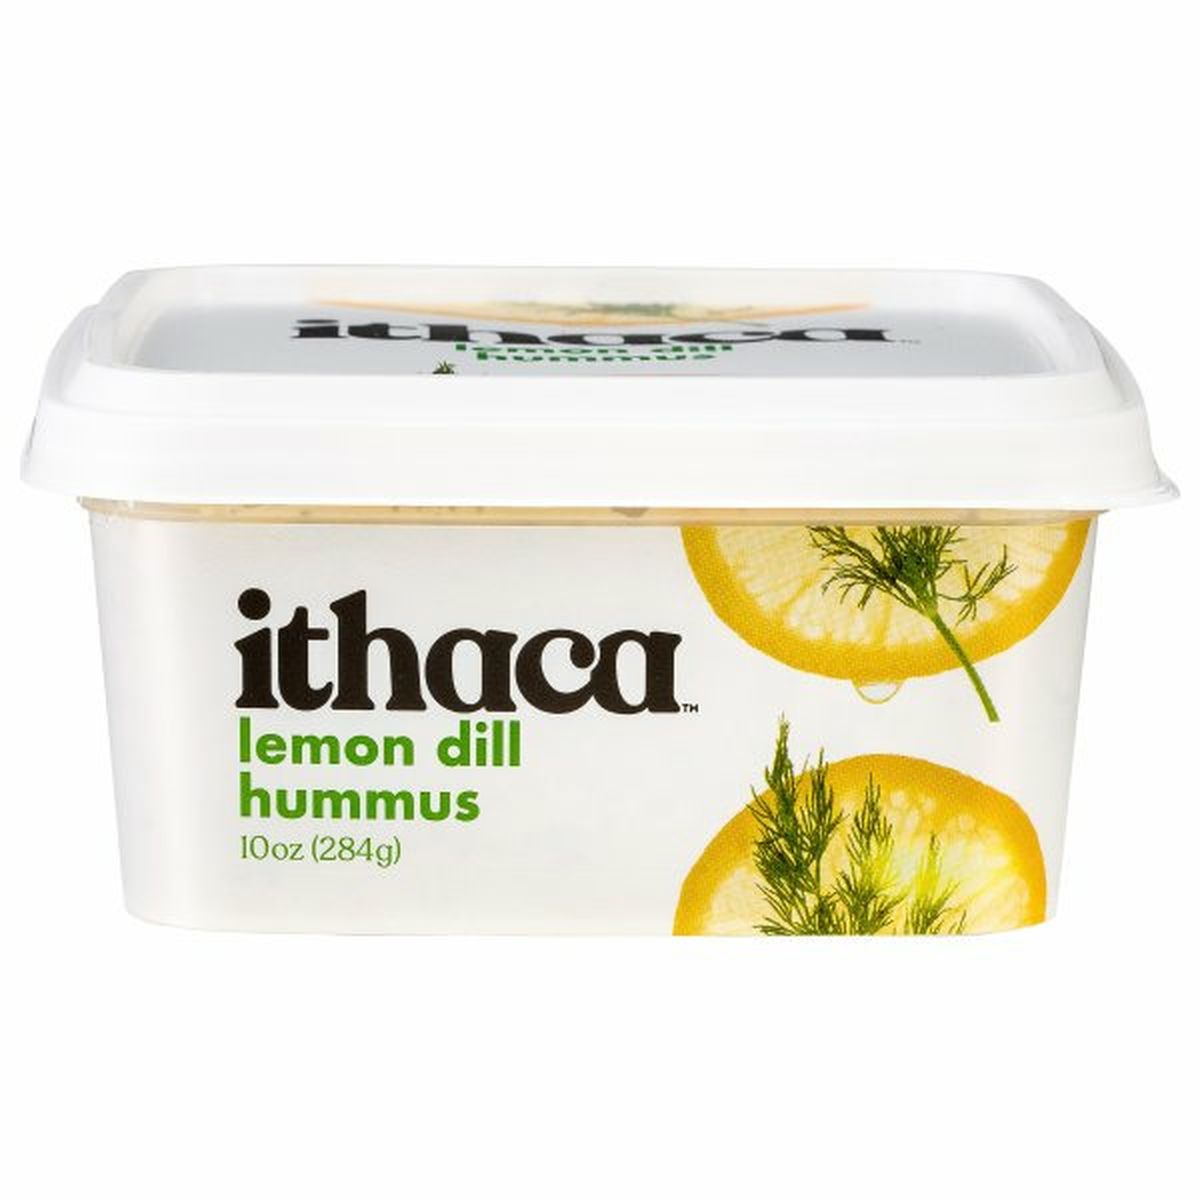 Calories in Ithaca Hummus, Lemon Dill